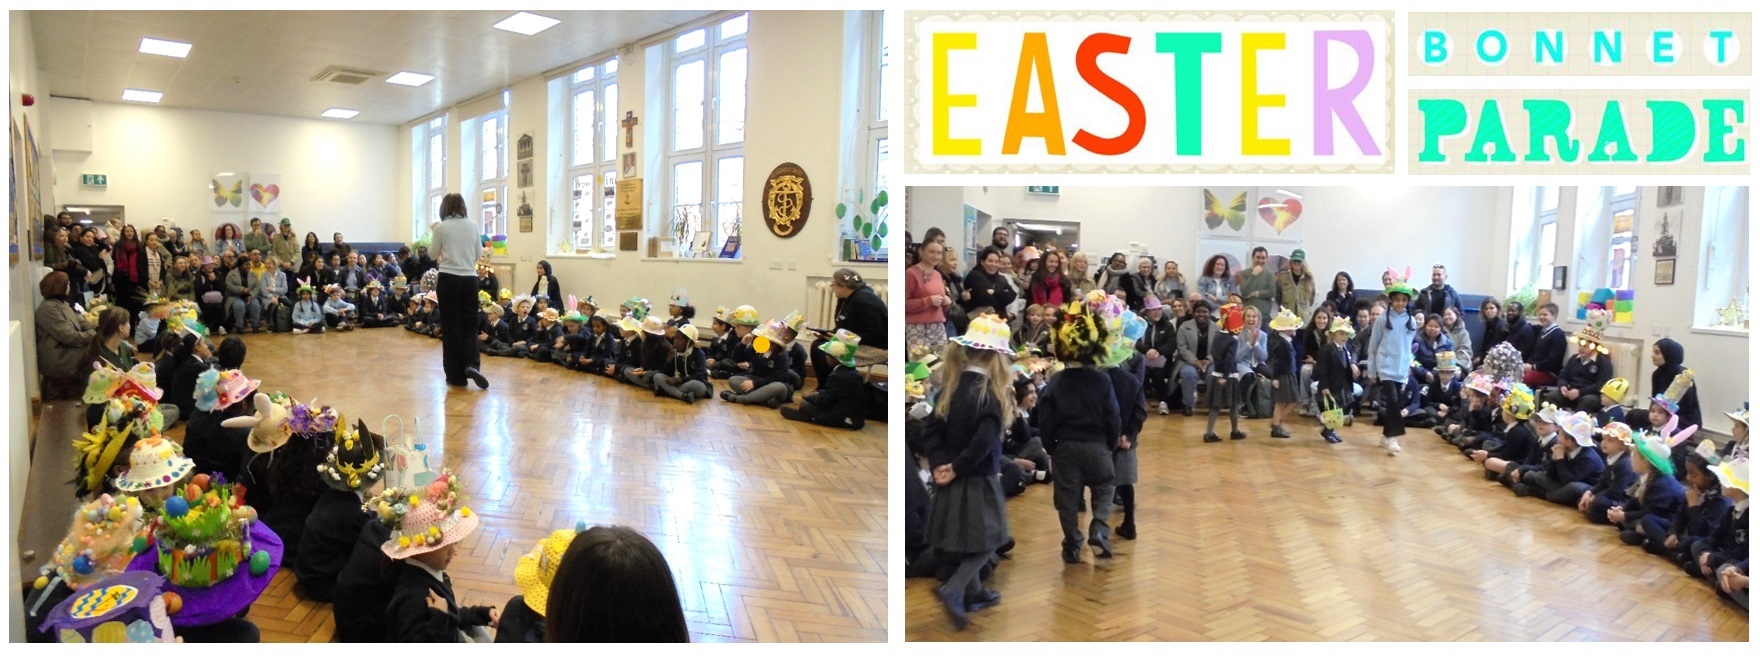 Easter bonnet parade   blog pic 1